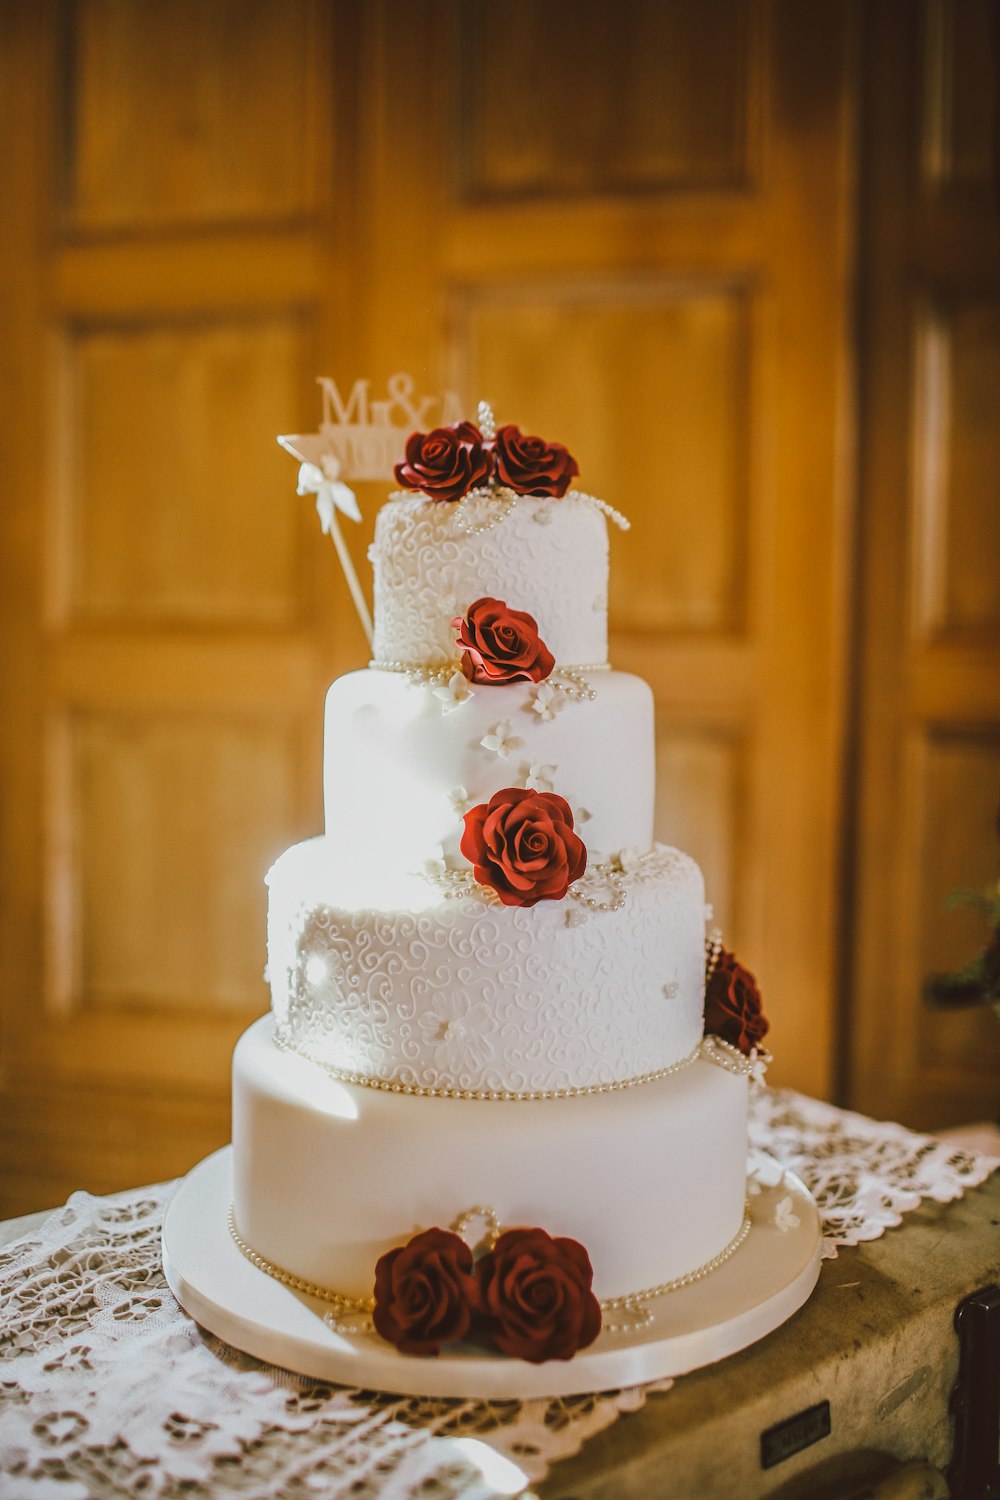 100 Wedding Cake Pictures Download Free Images On Unsplash